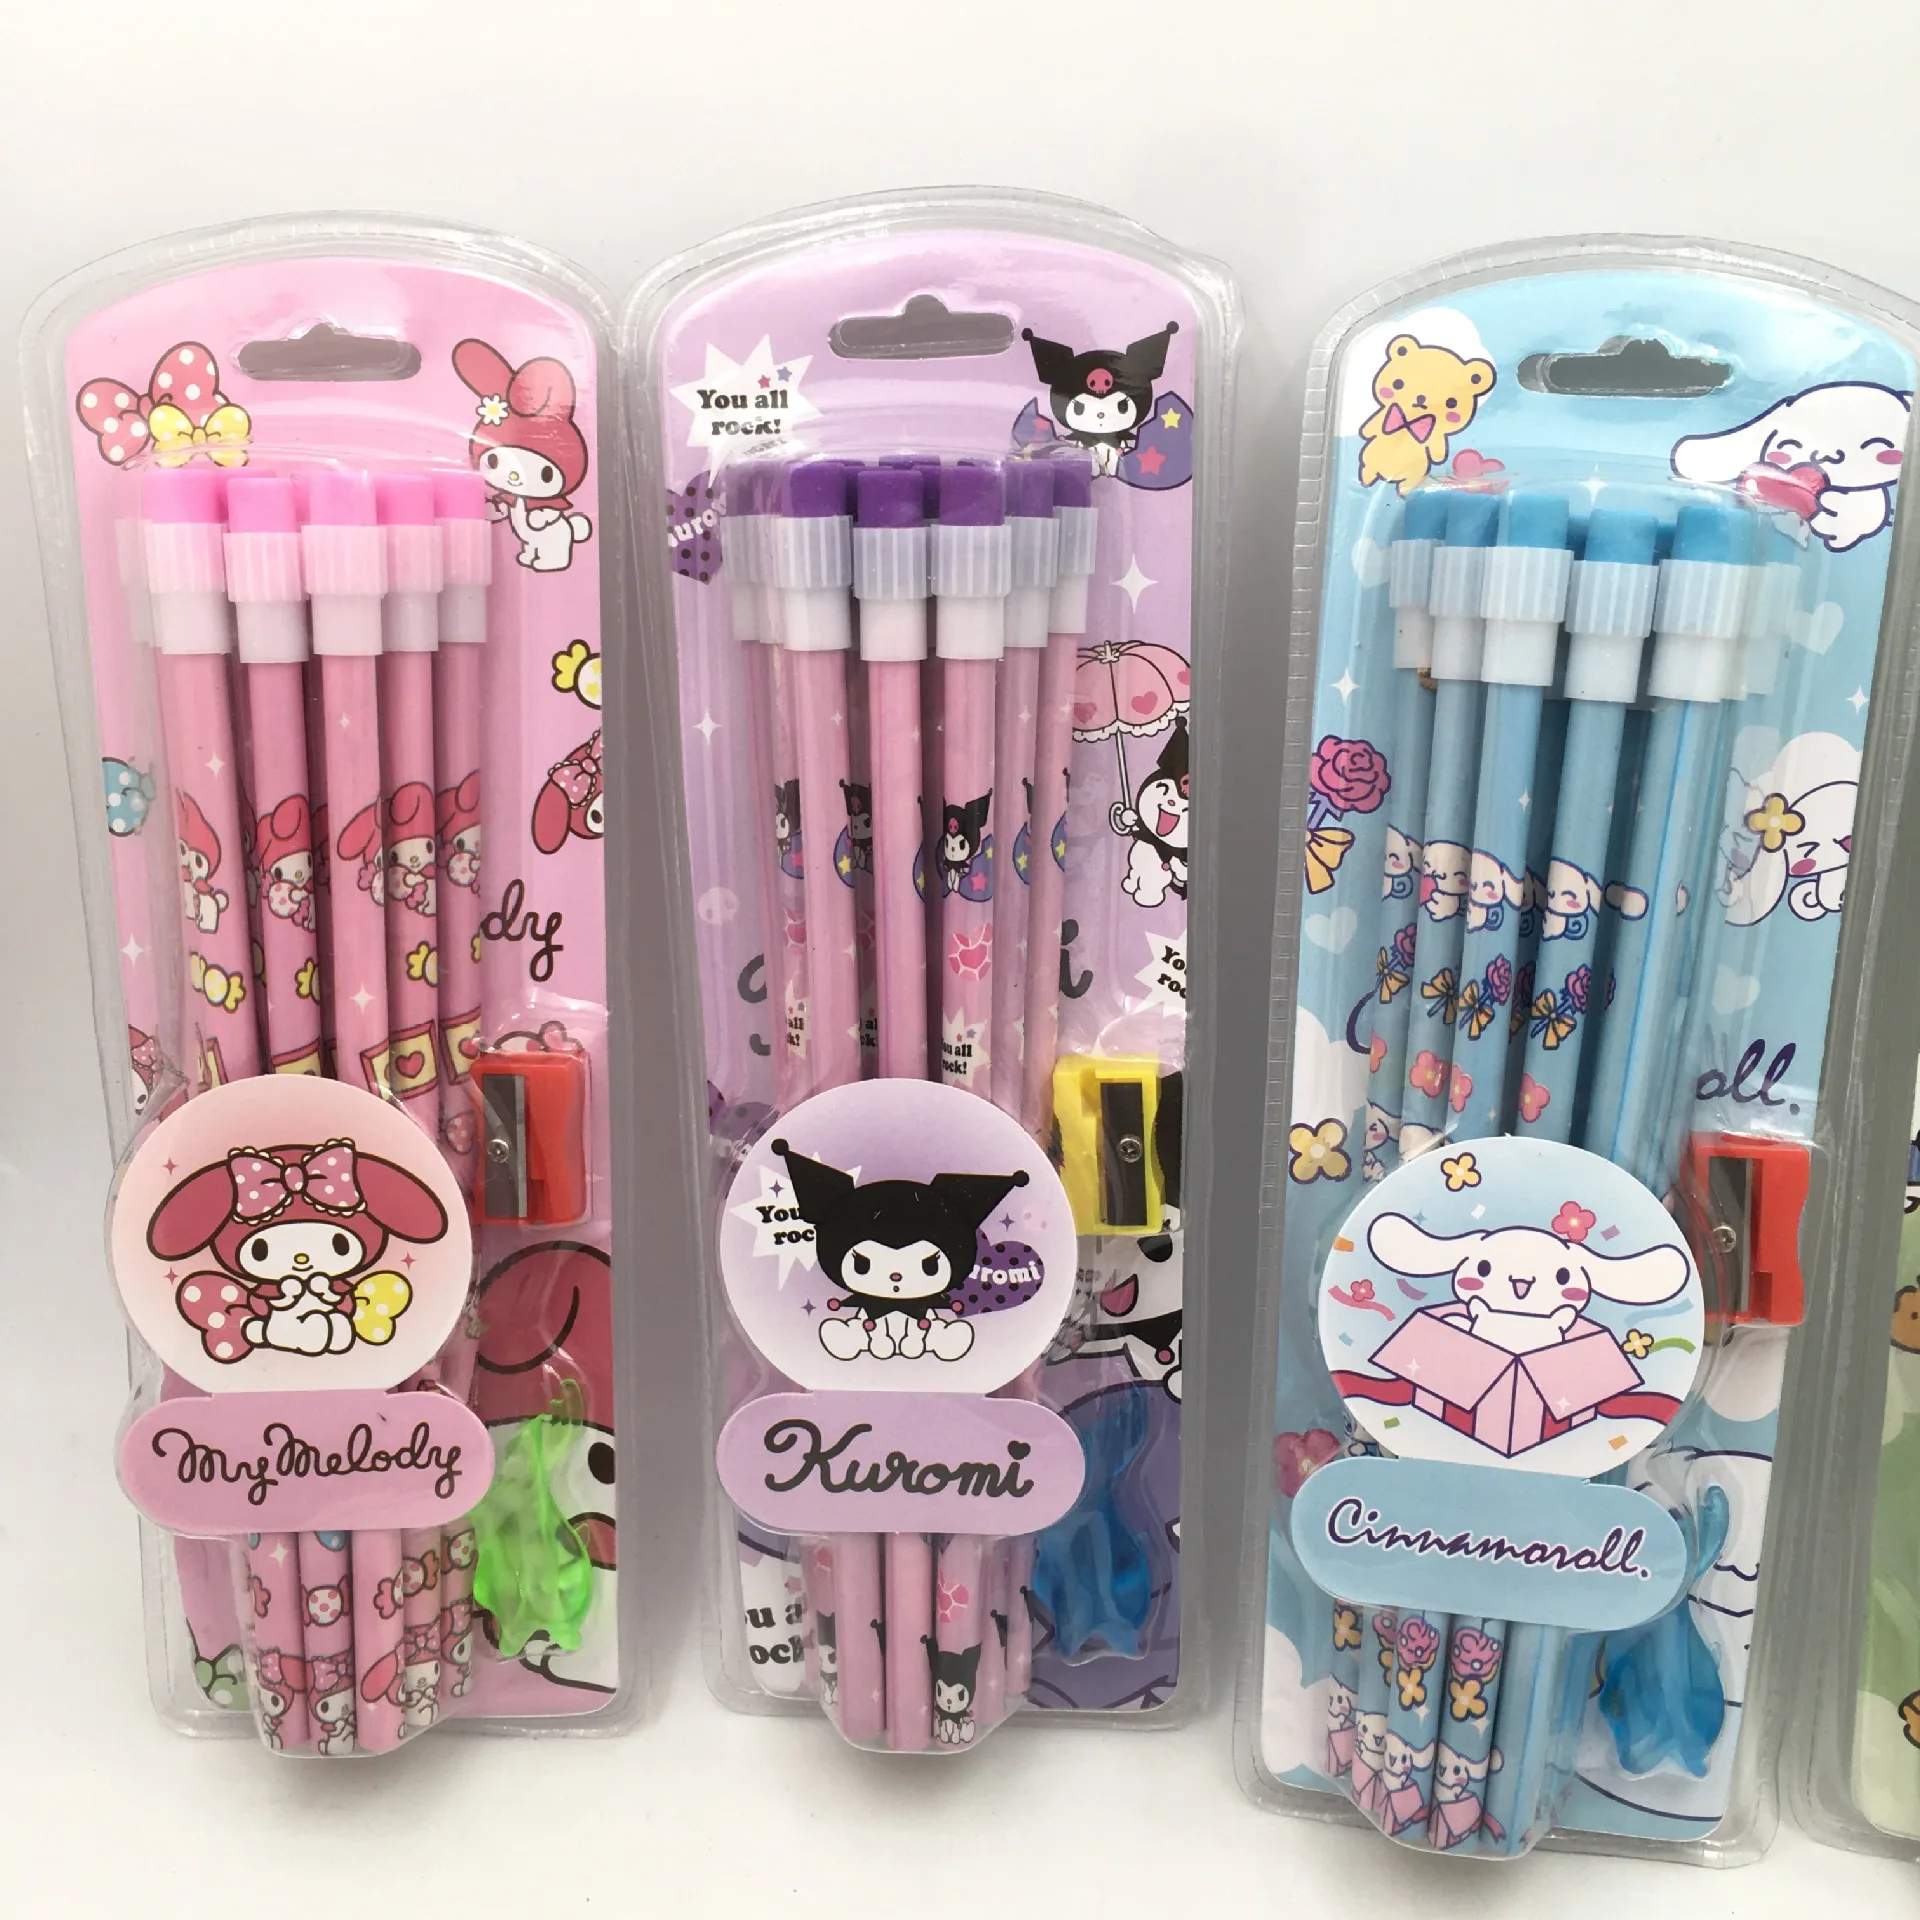 MB1 12Pcs/Set My Melody Pencil Sets Kuromi Sharpener School Supplies Stationary Pencil With Eraser Kuromi Accessories